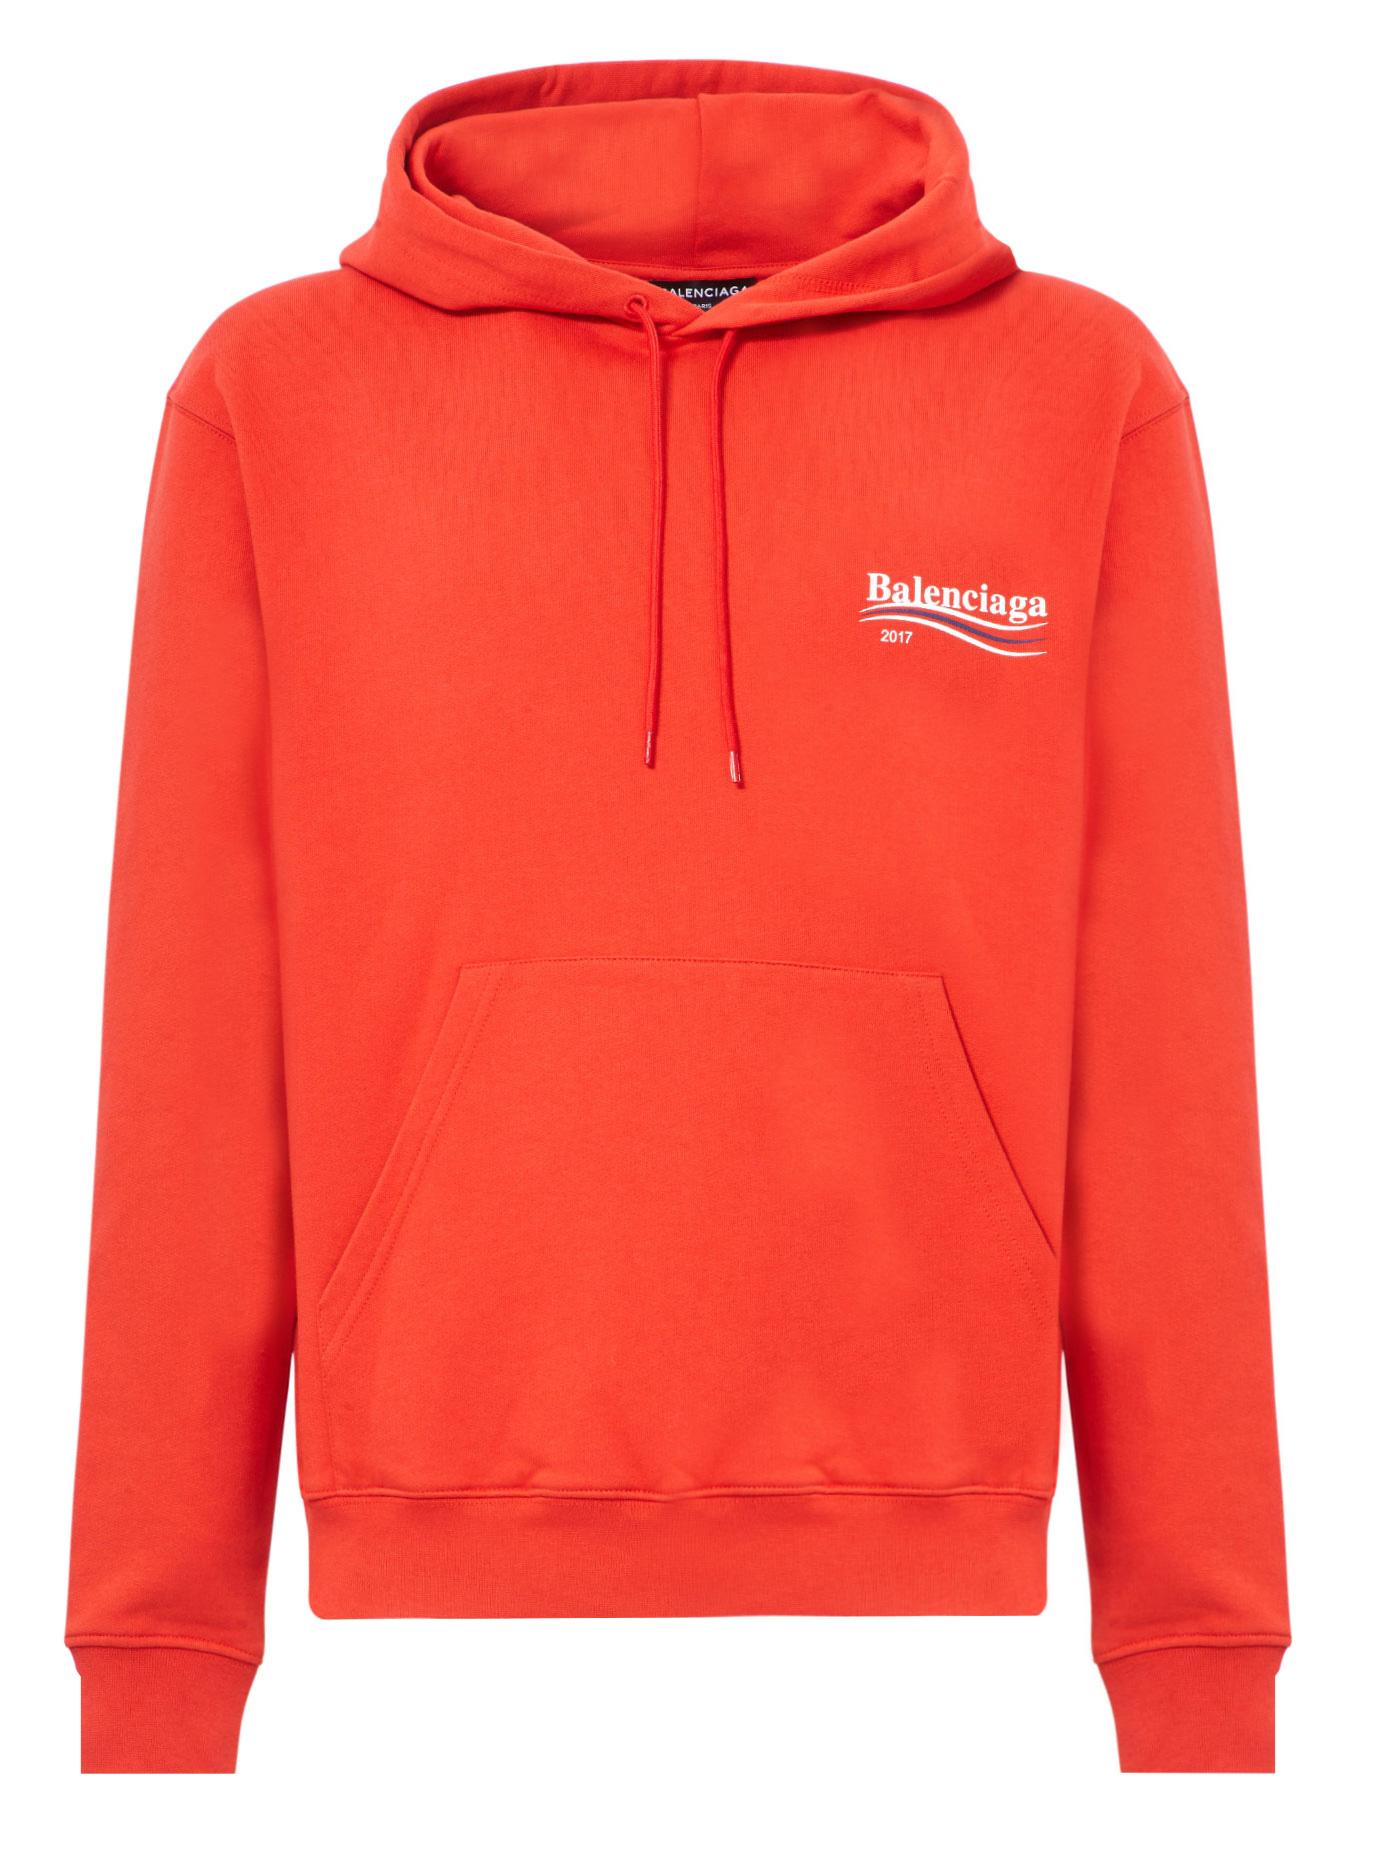 balenciaga campaign hoodie replica